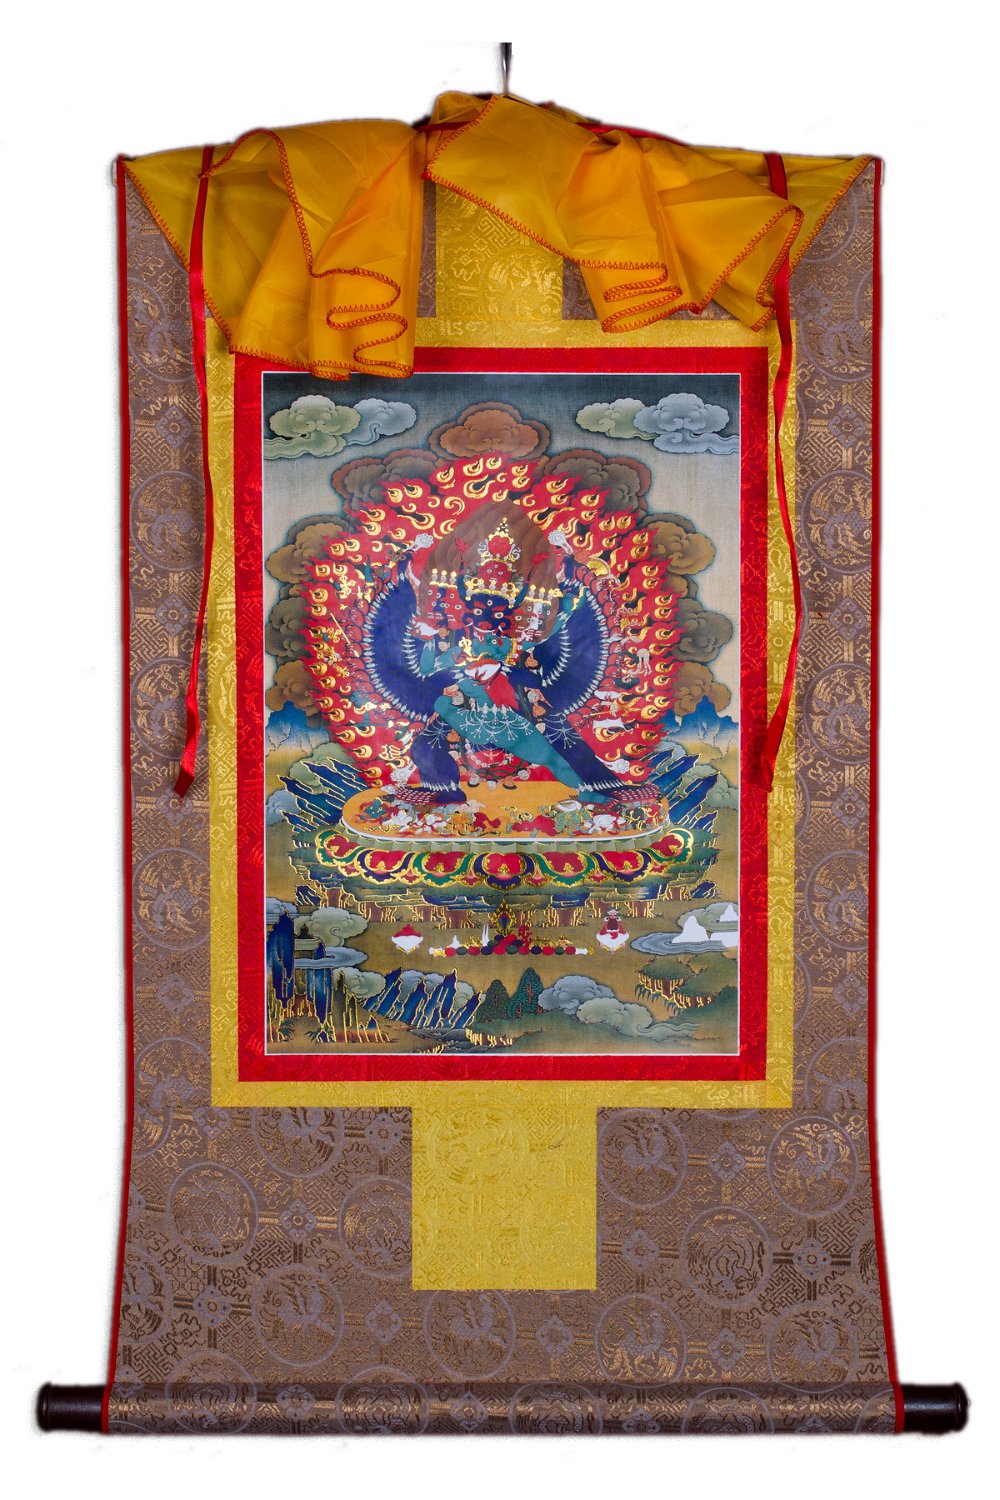 Тханка Ямантака (печатная, ~51 х 83 см), ~ 51 х 83 см, изображение: ~ 32 х 45 см